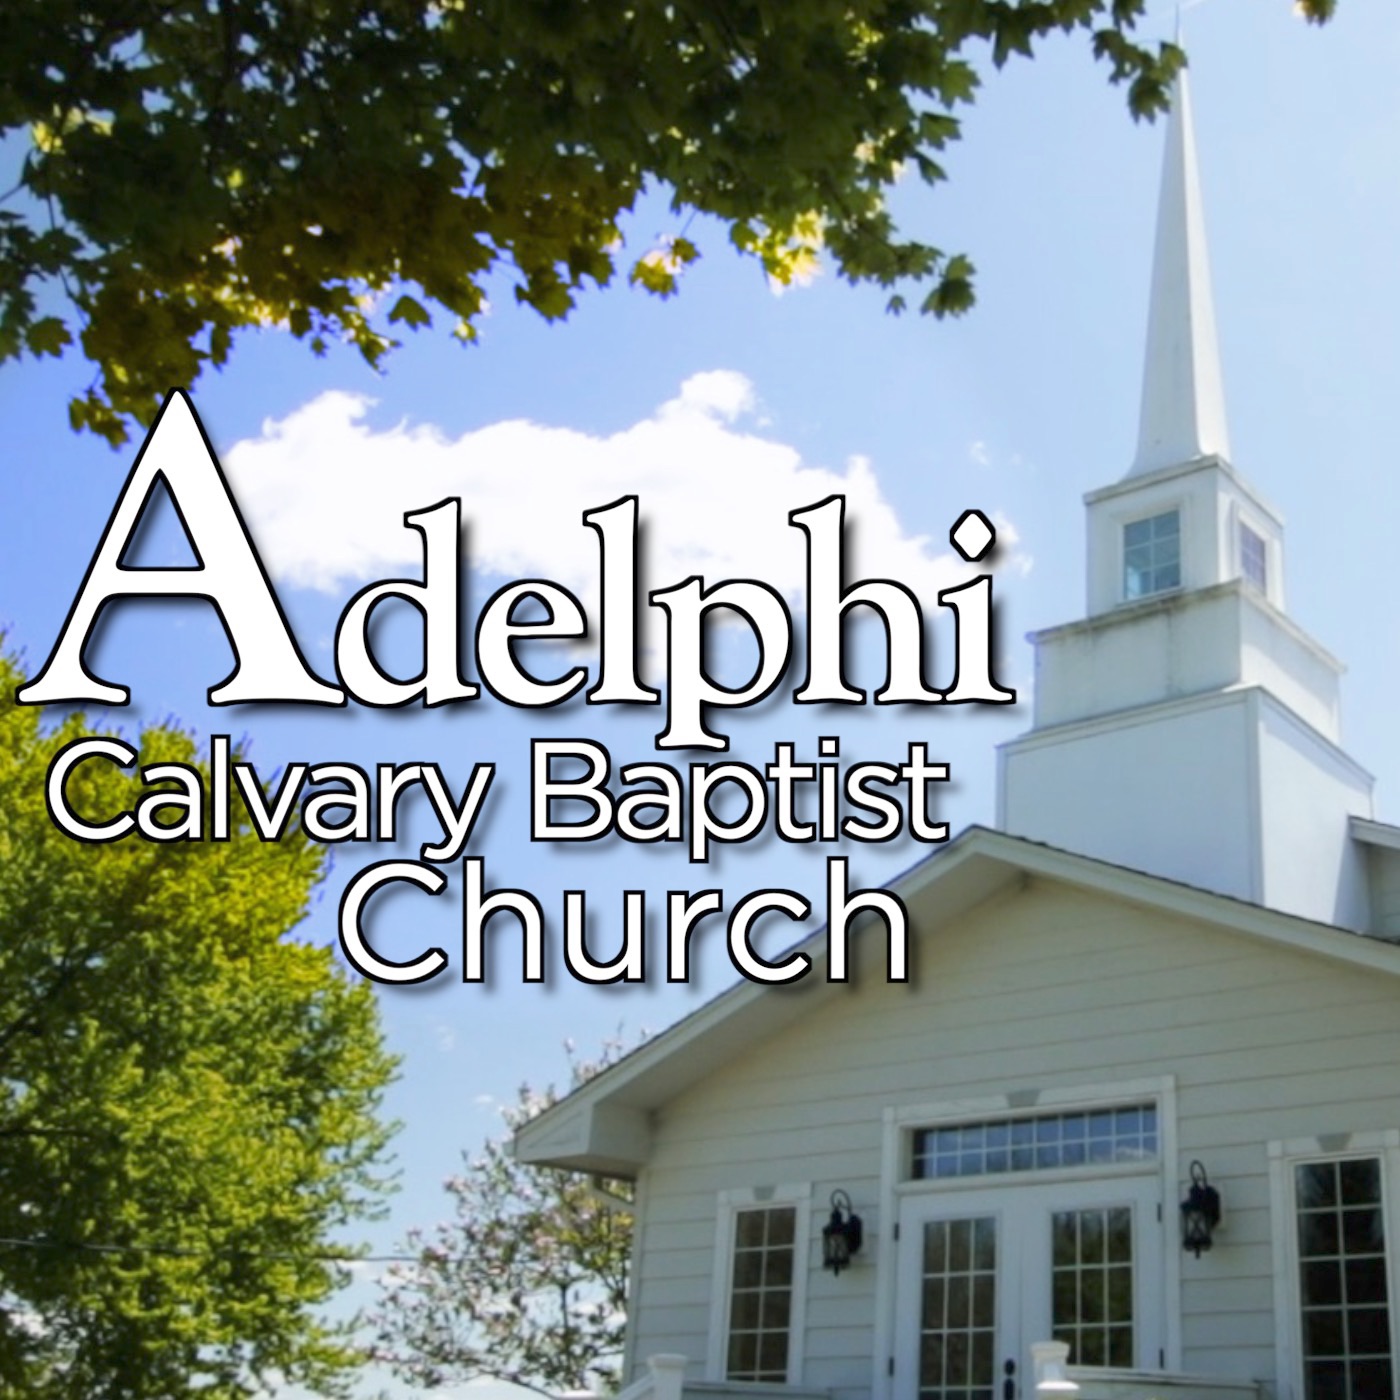 Adelphi Calvary Baptist Church